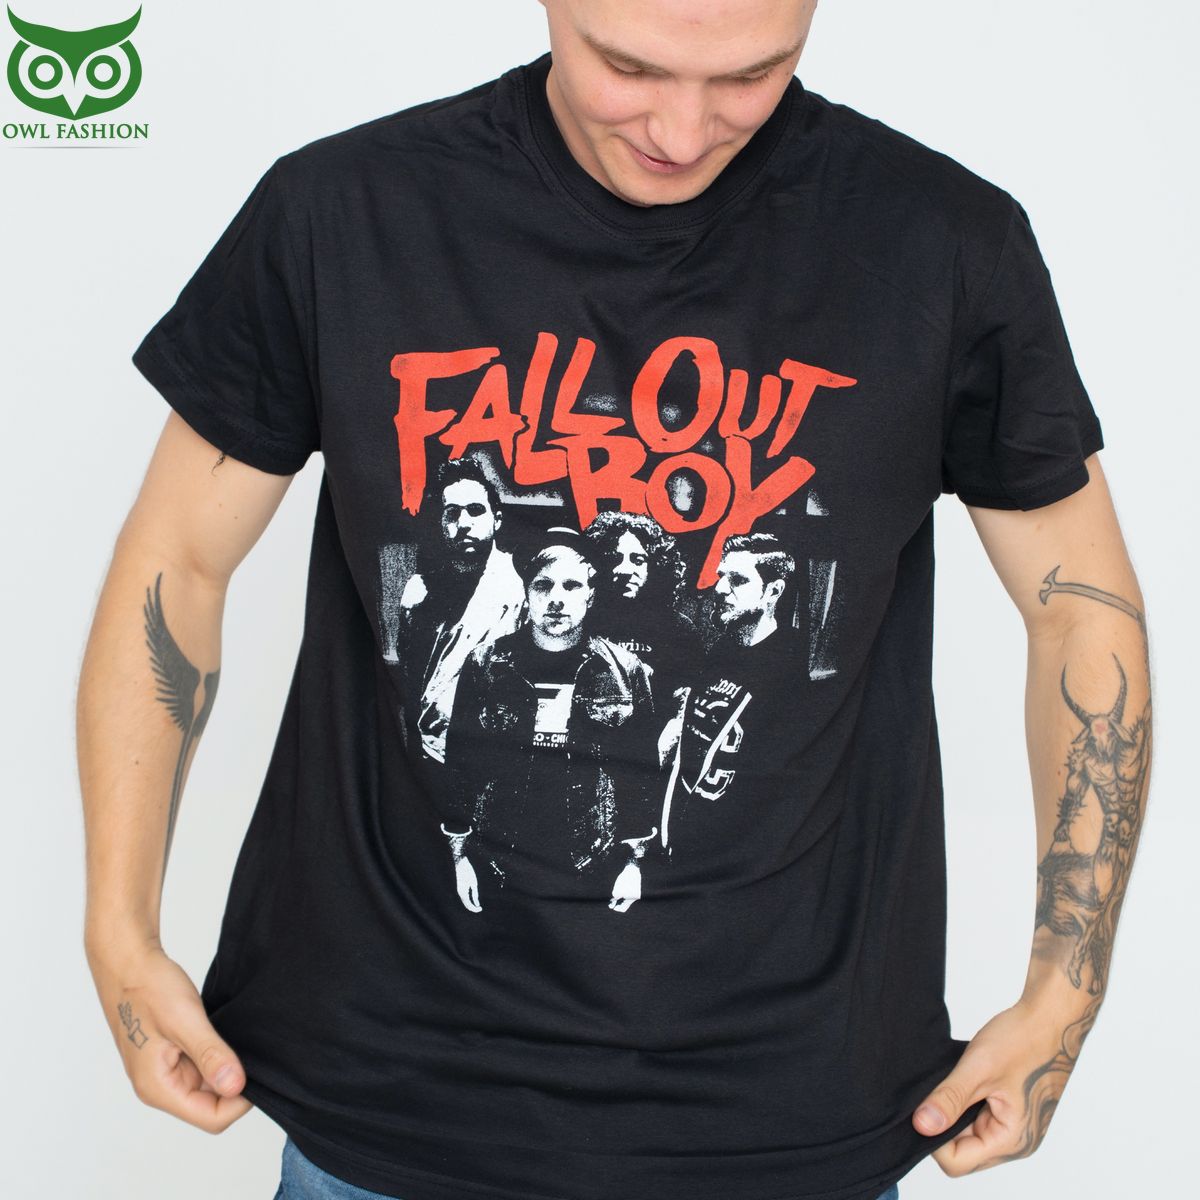 fall out boy rock band t shirt Shop Owl Fashion Rocking picture